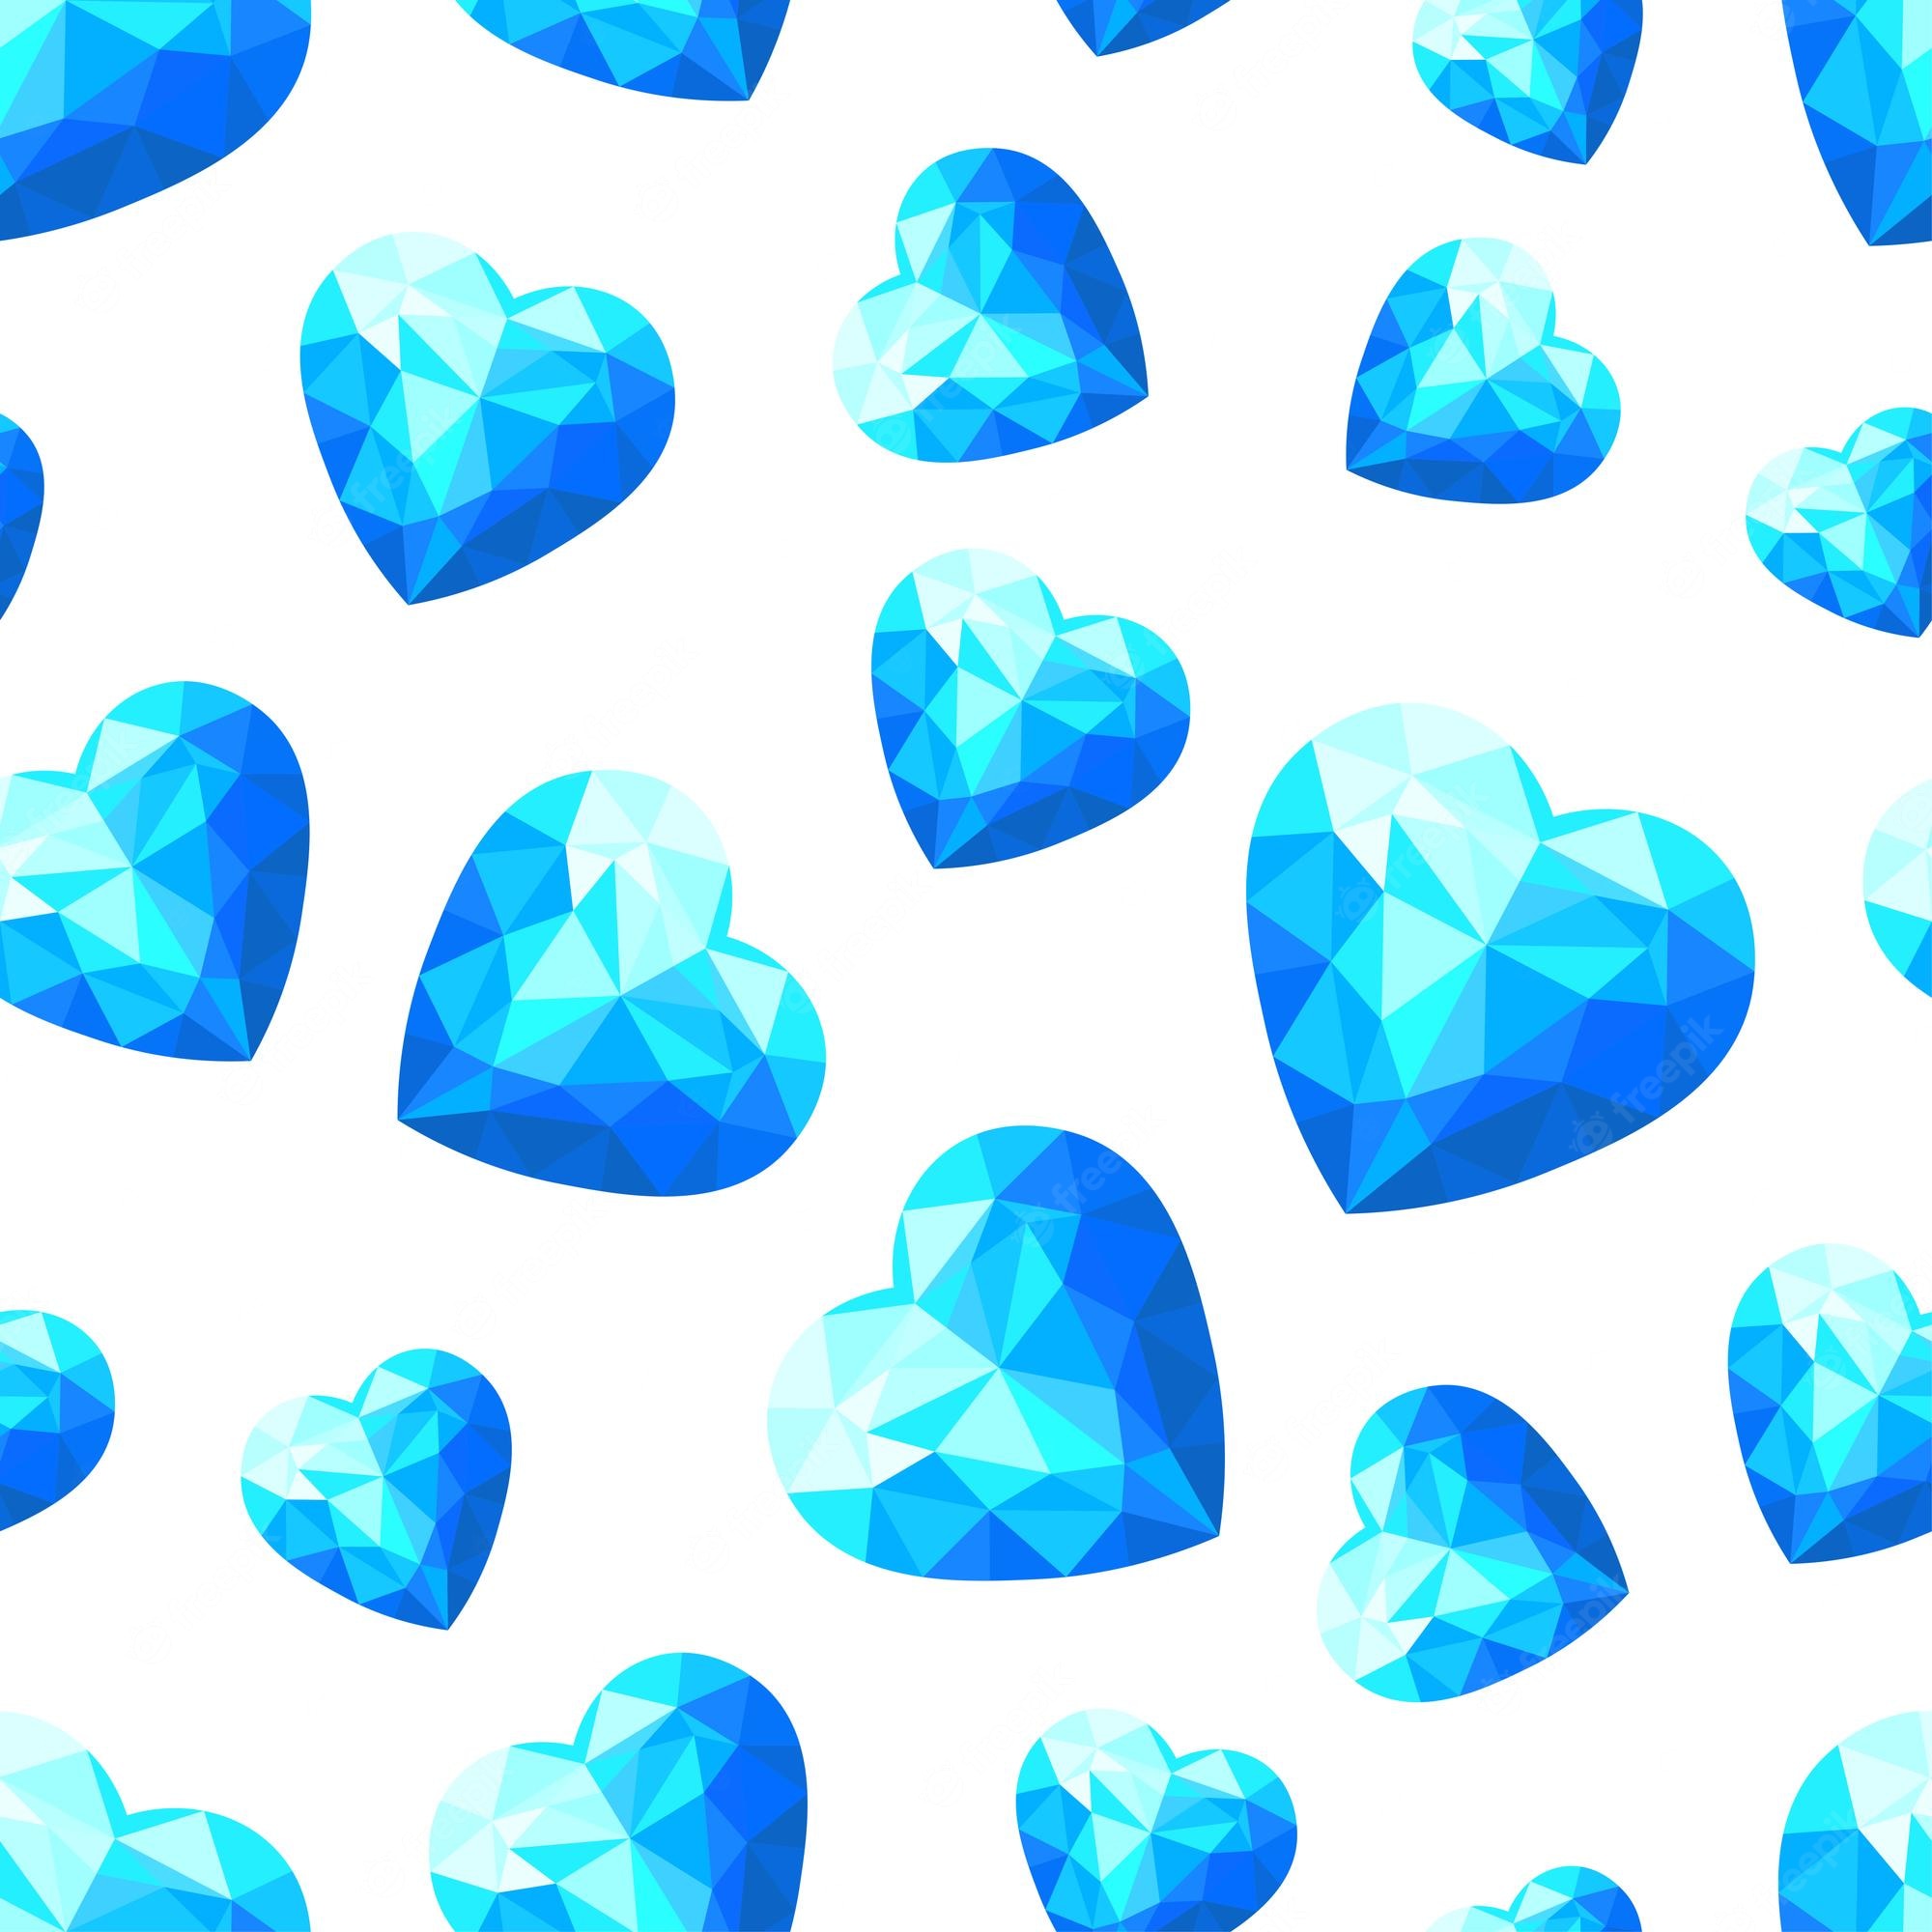 Blue Heart Wallpapers